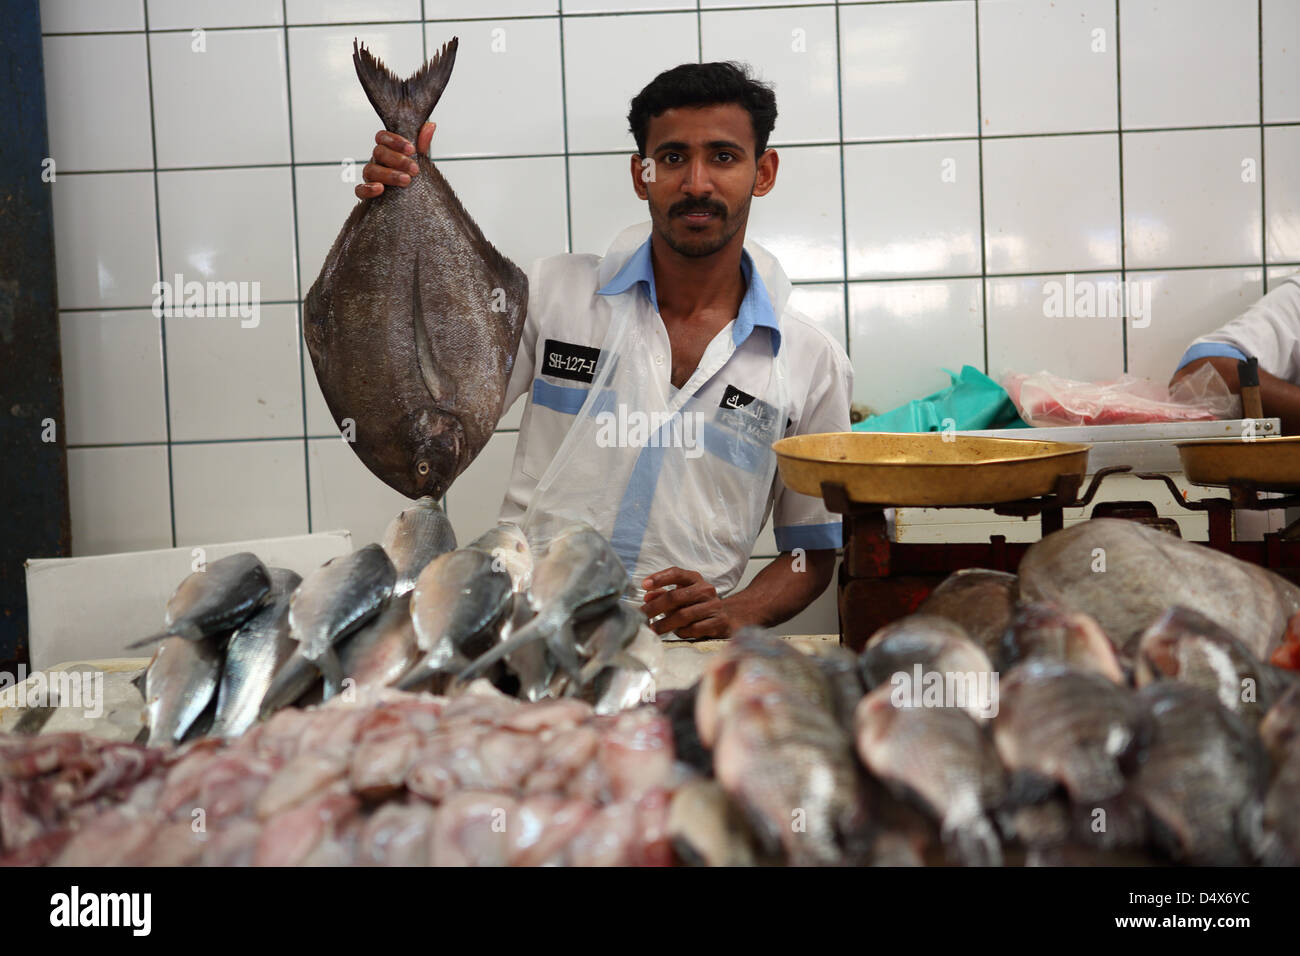 Man holding fish at market in Dubai, United Arab Emirates Stock Photo